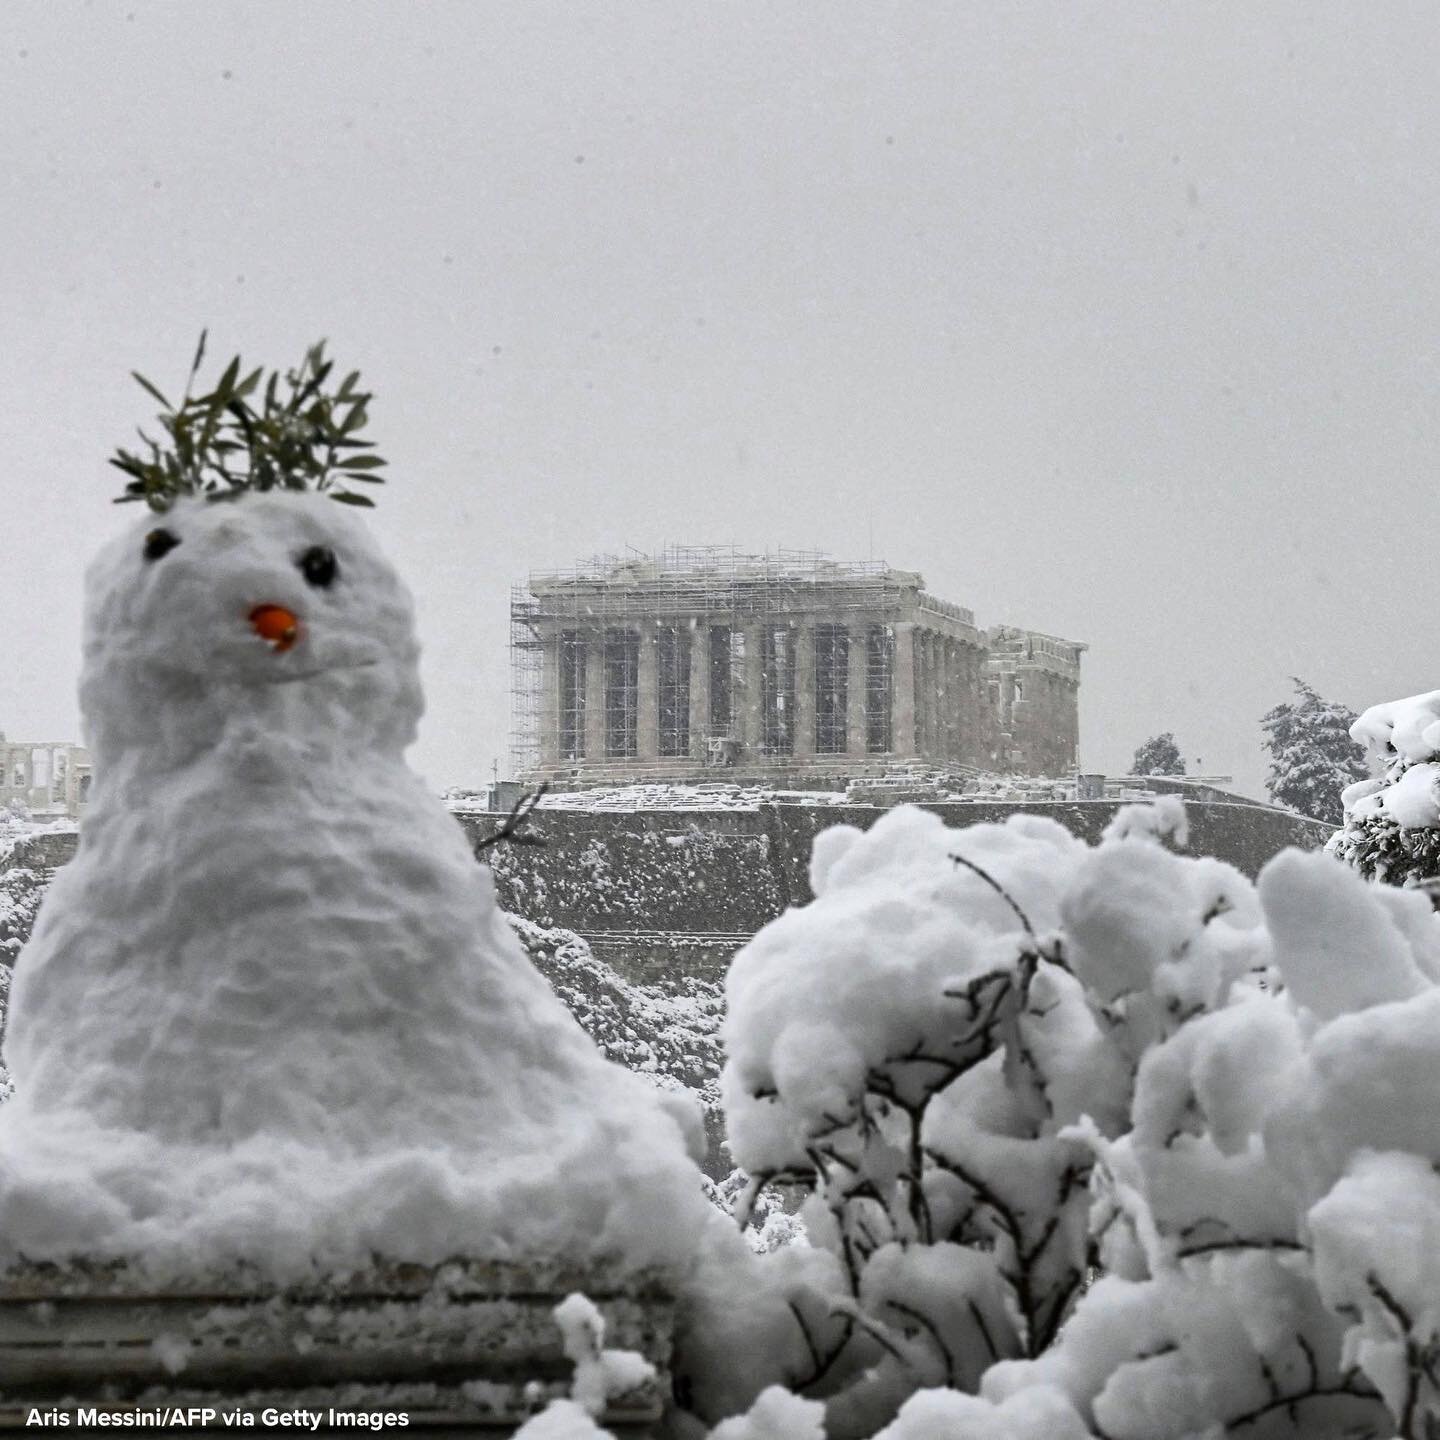 Even the Parthenon?! Stay warm and safe everyone. 🥶🥶 #parthenon #acropolistech #snowpocalypse #coldweather